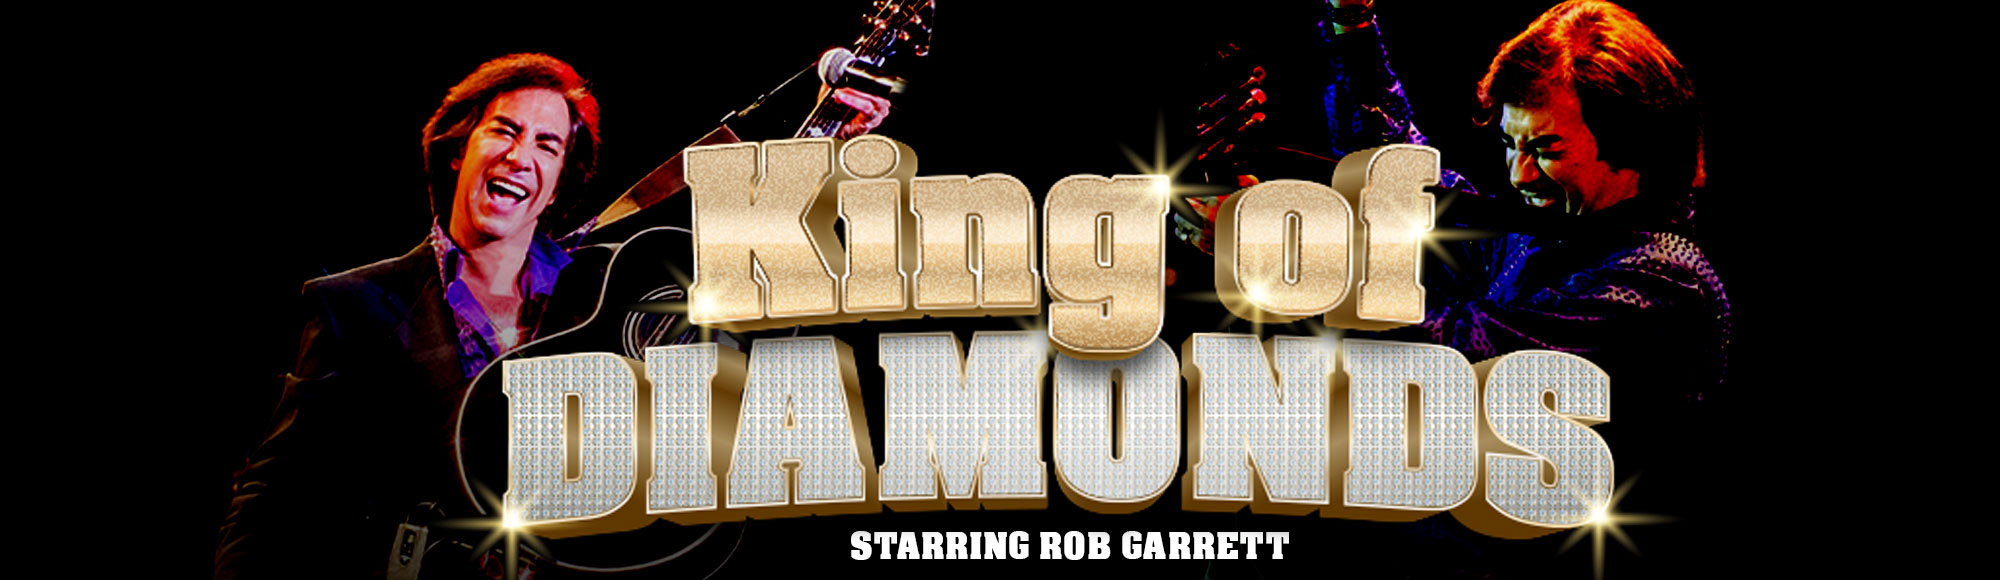 King of Diamonds - The Neil Diamond Tribute show